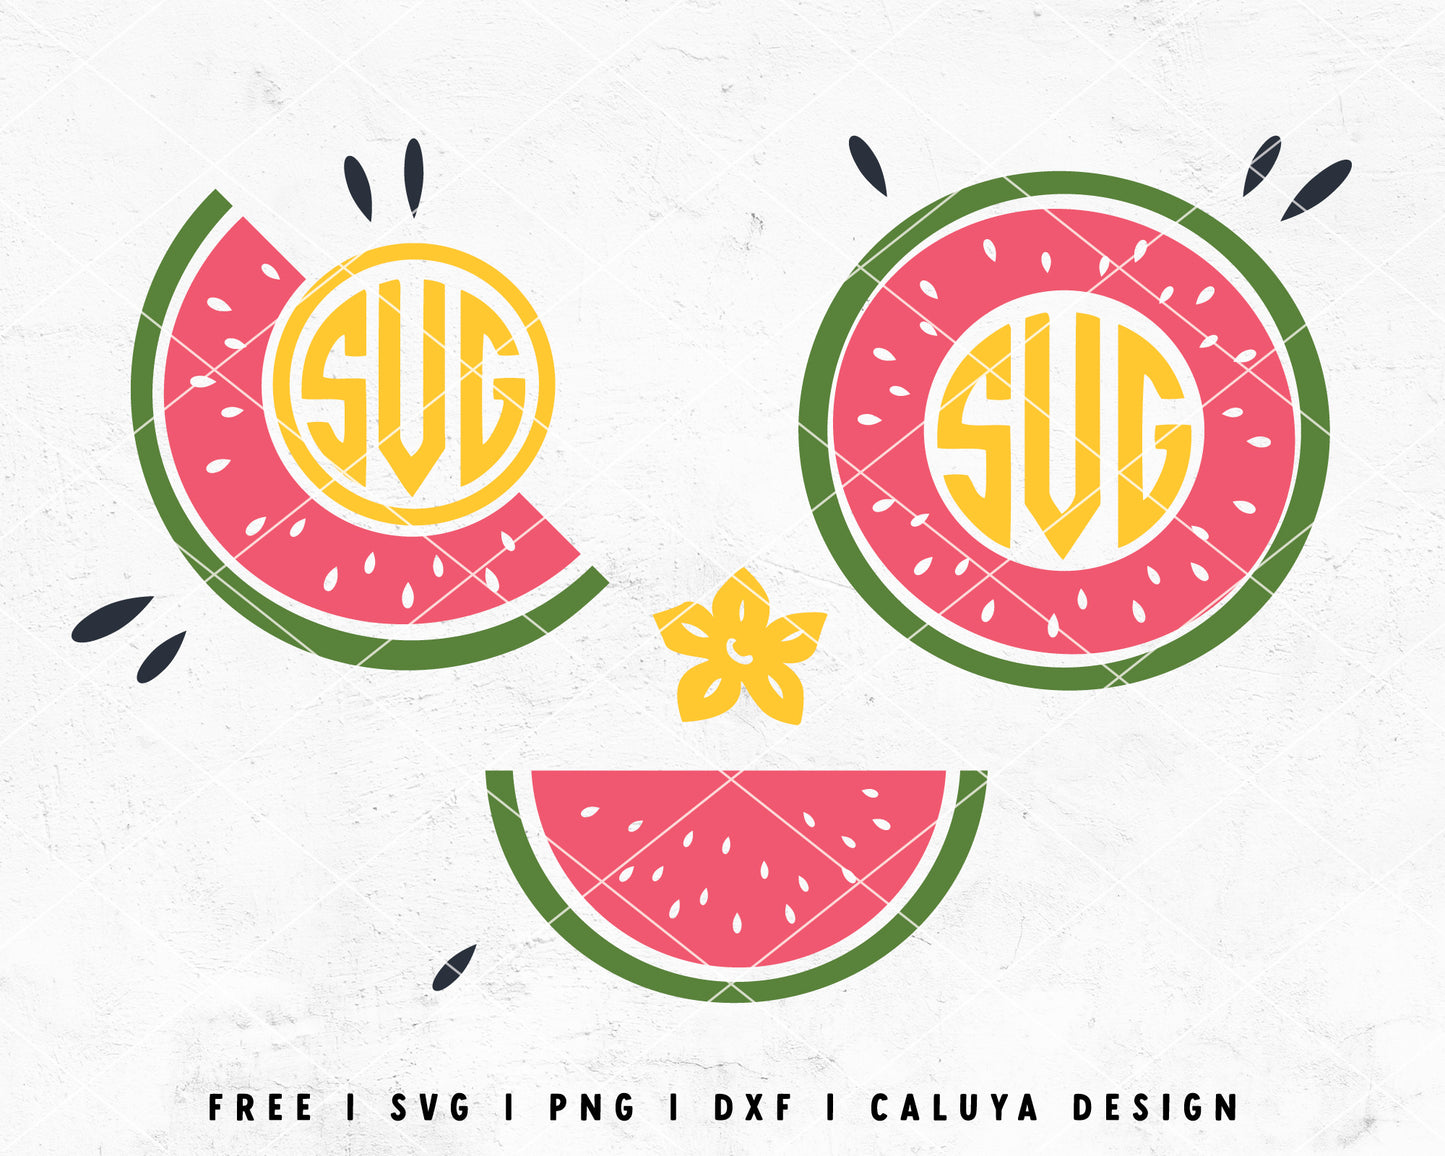 FREE Watermelon SVG | Fruit SVG | Summer SVG Cut File for Cricut, Cameo Silhouette | Free SVG Cut File